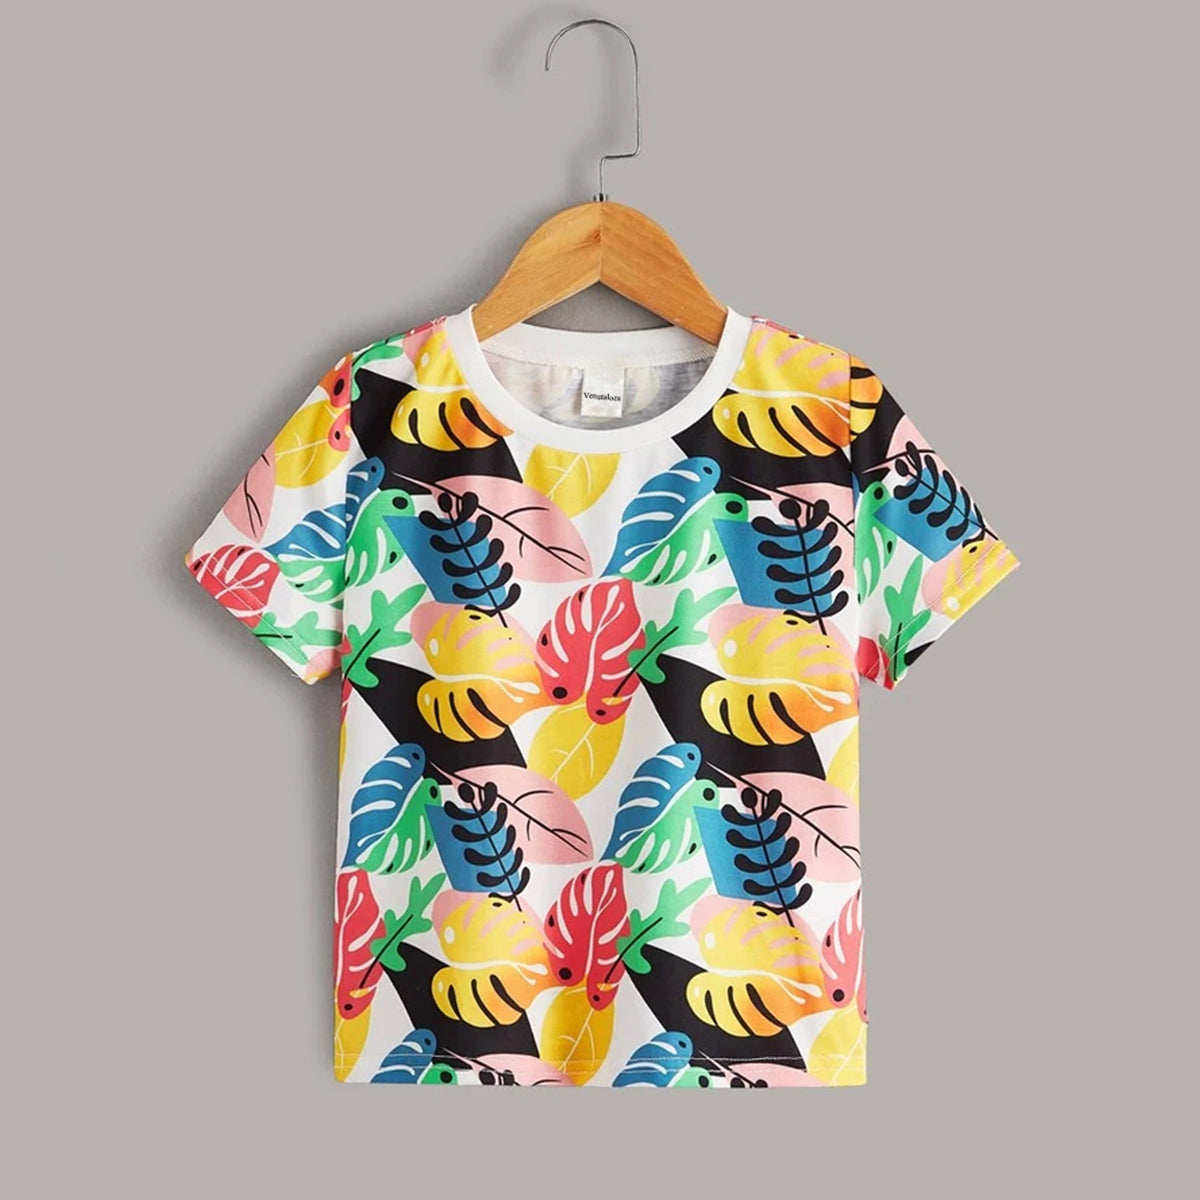 Venutaloza Toddler Boy's Tropical Print Neck Color Block T-Shirt For Boy's & Girl's..